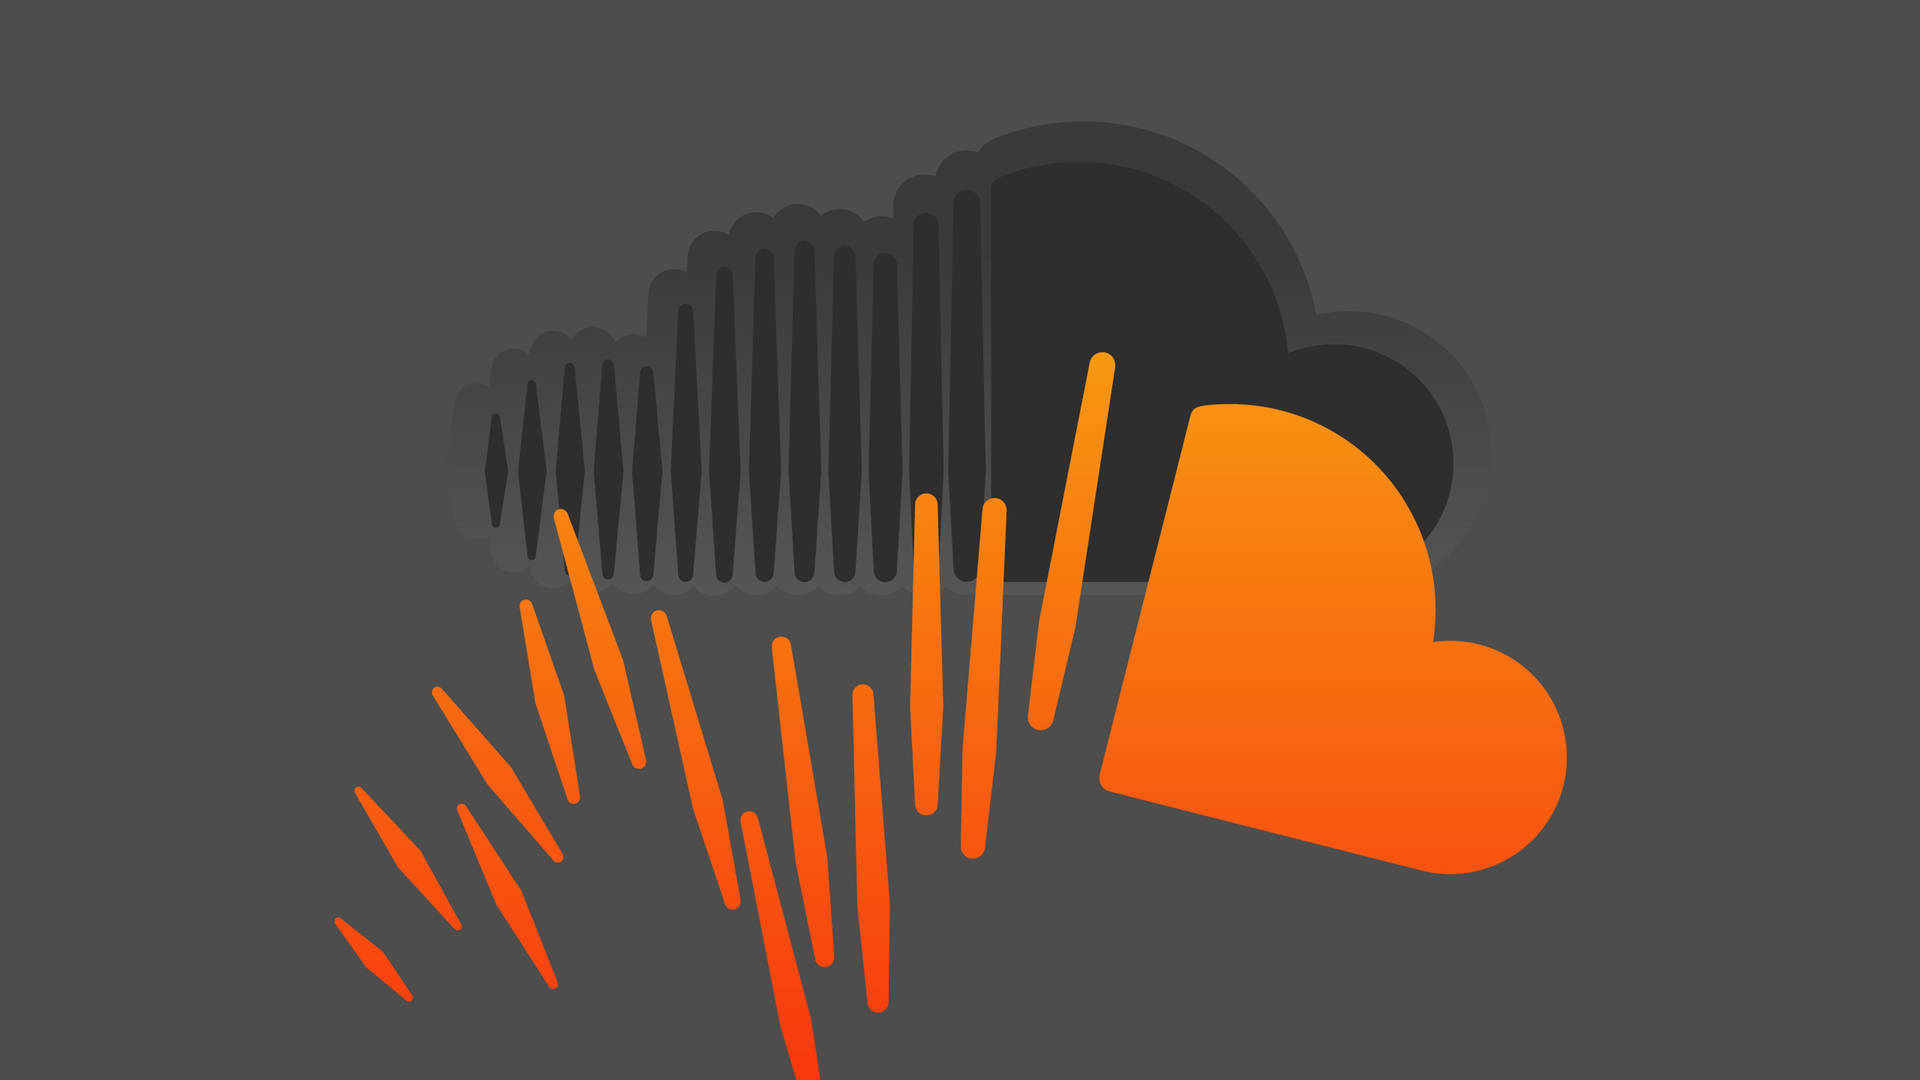 Soundcloud Music Streaming Art